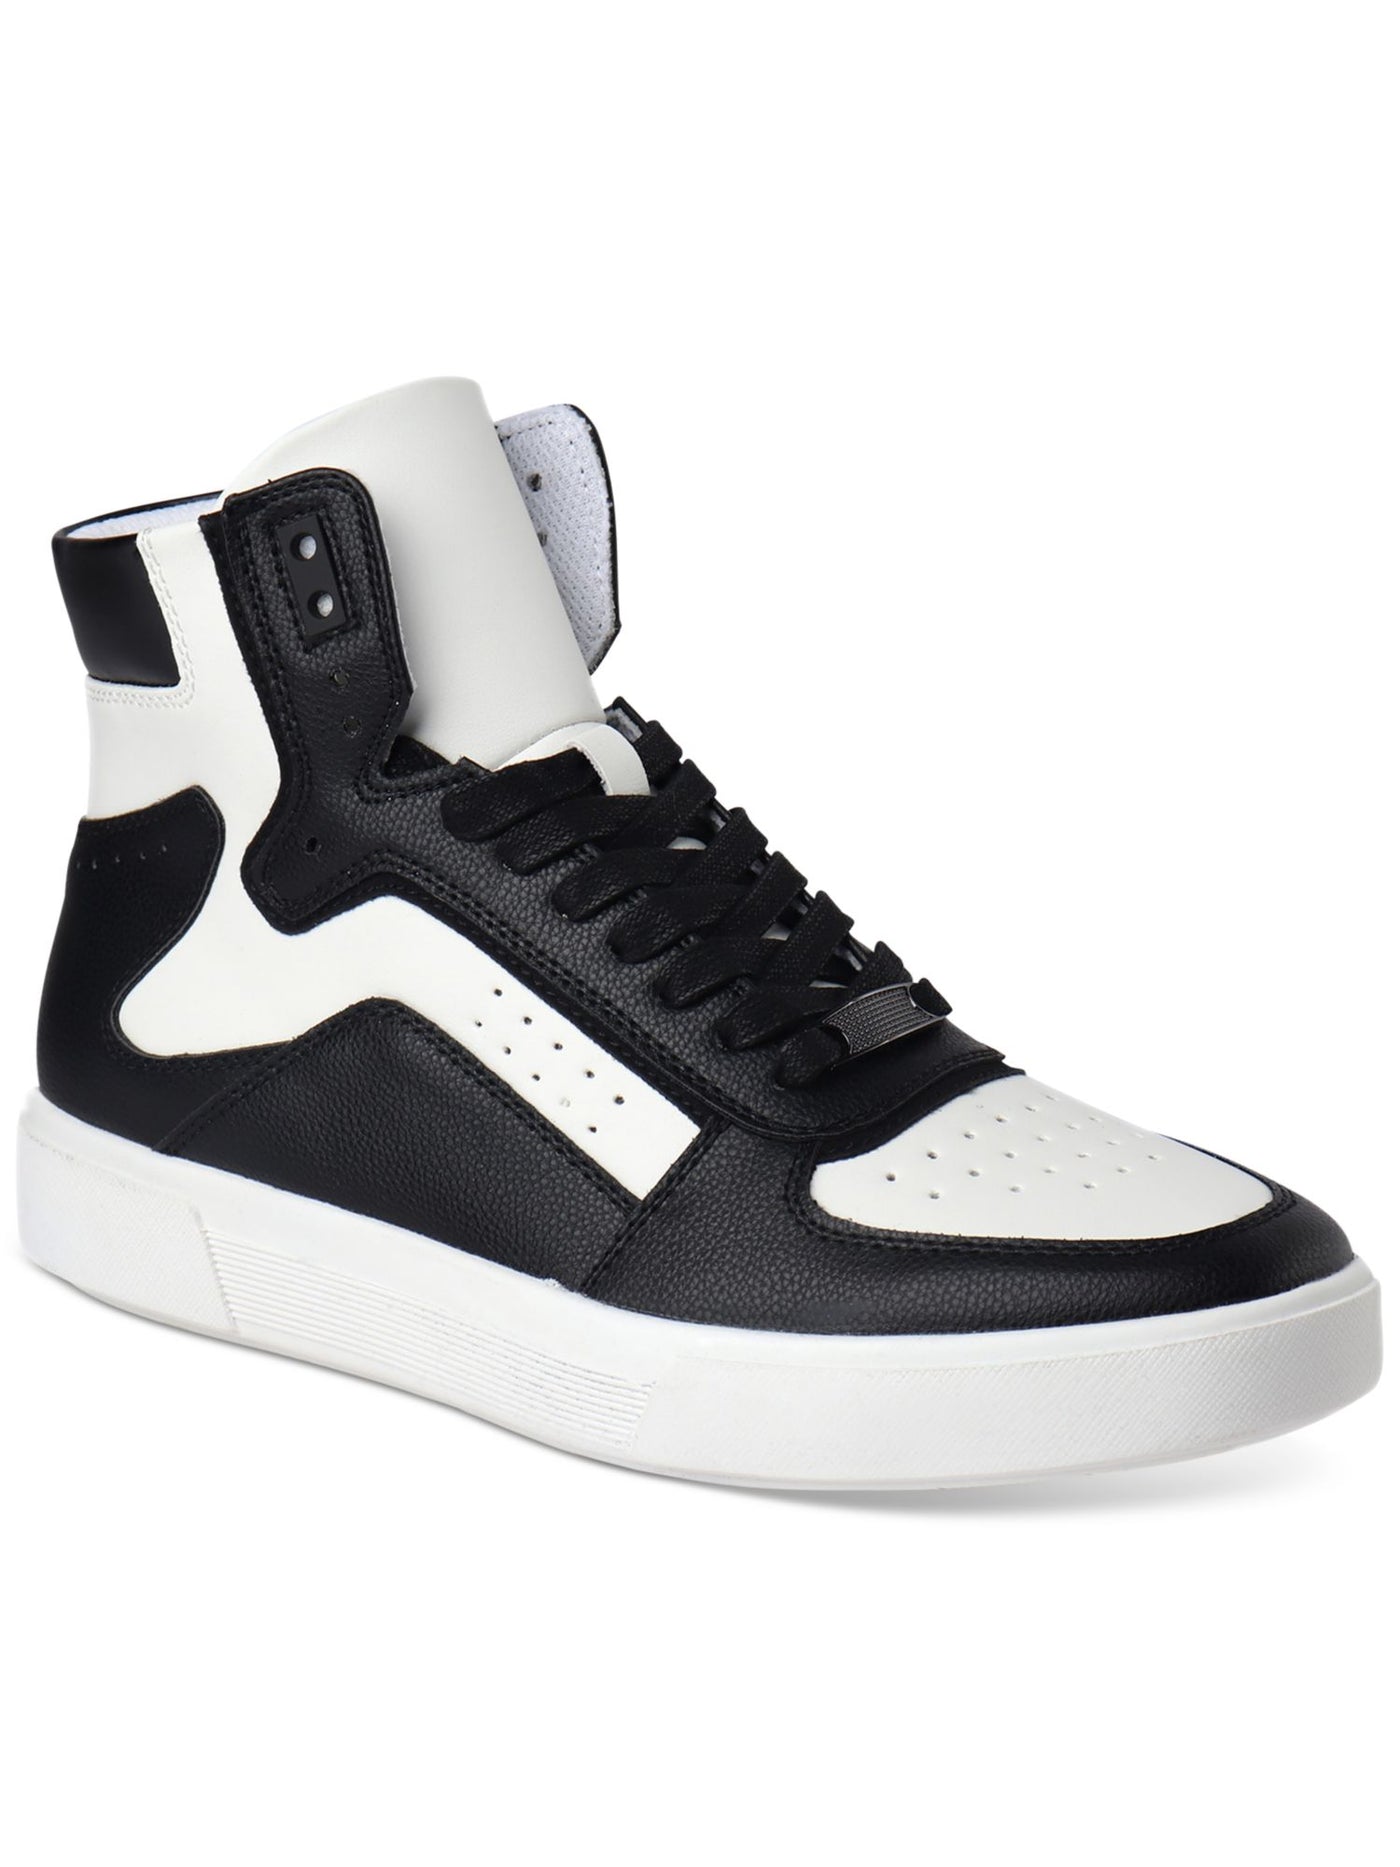 INC Mens Black Comfort Perforated Keanu Round Toe Platform Lace-Up Athletic Sneakers 8.5 M